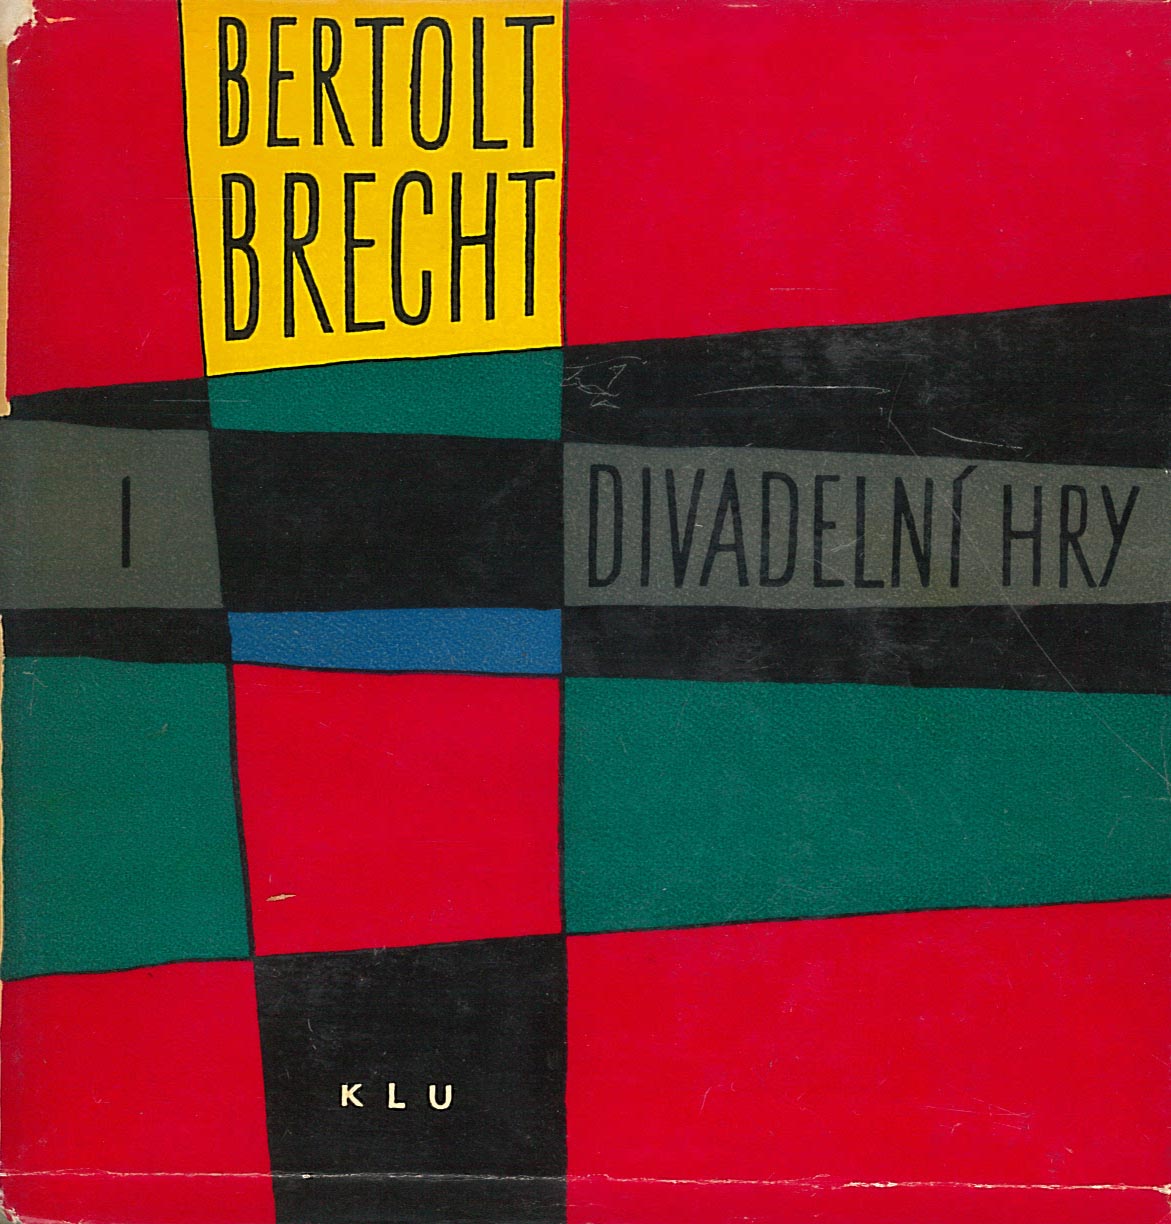 Divadelní hry I. (Bertolt Brecht)